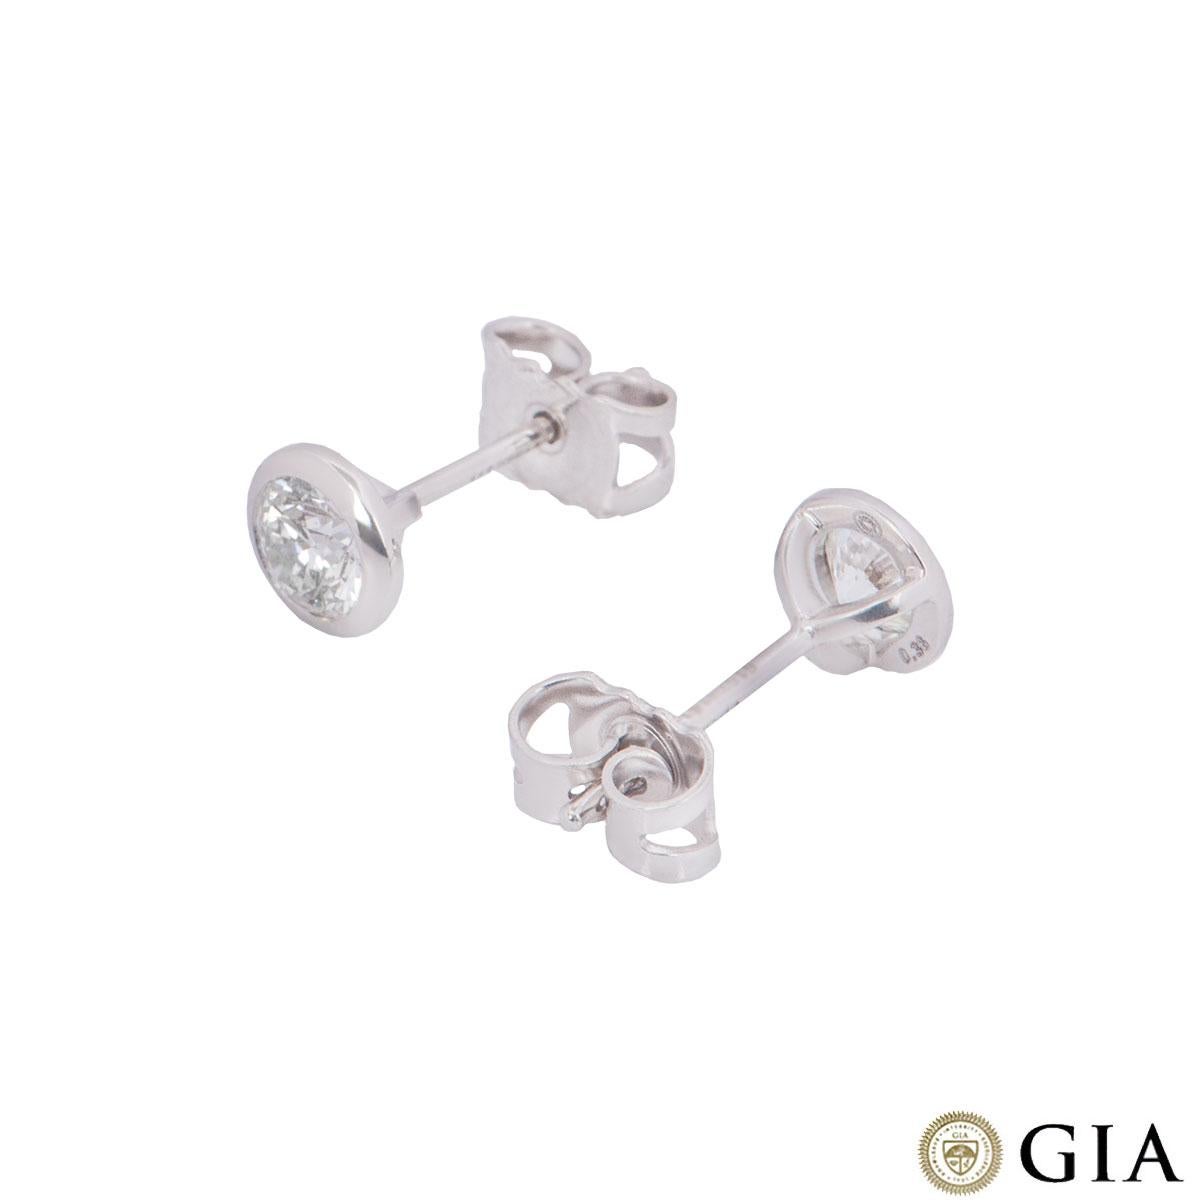 Round Cut GIA Certified Round Brilliant Cut Diamond Stud Earrings